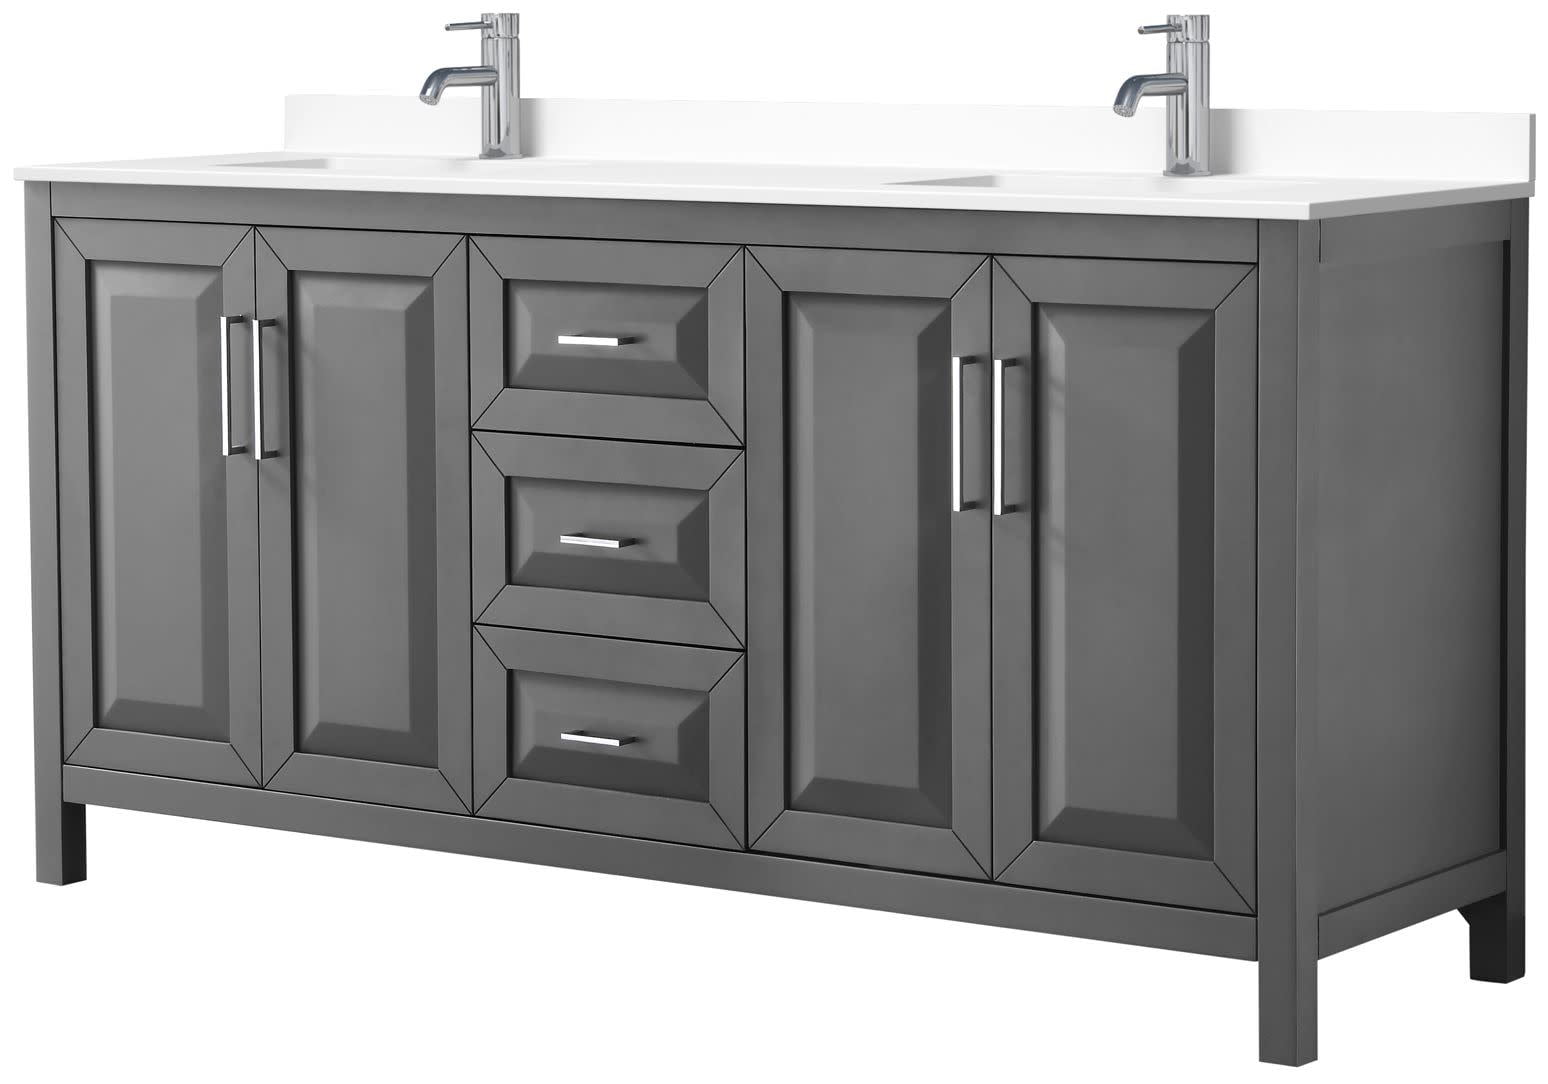 Details about   Round Black Bathroom Glass Basin Vessel Sink Bowl Vanity Mixer Chrome Faucet Set